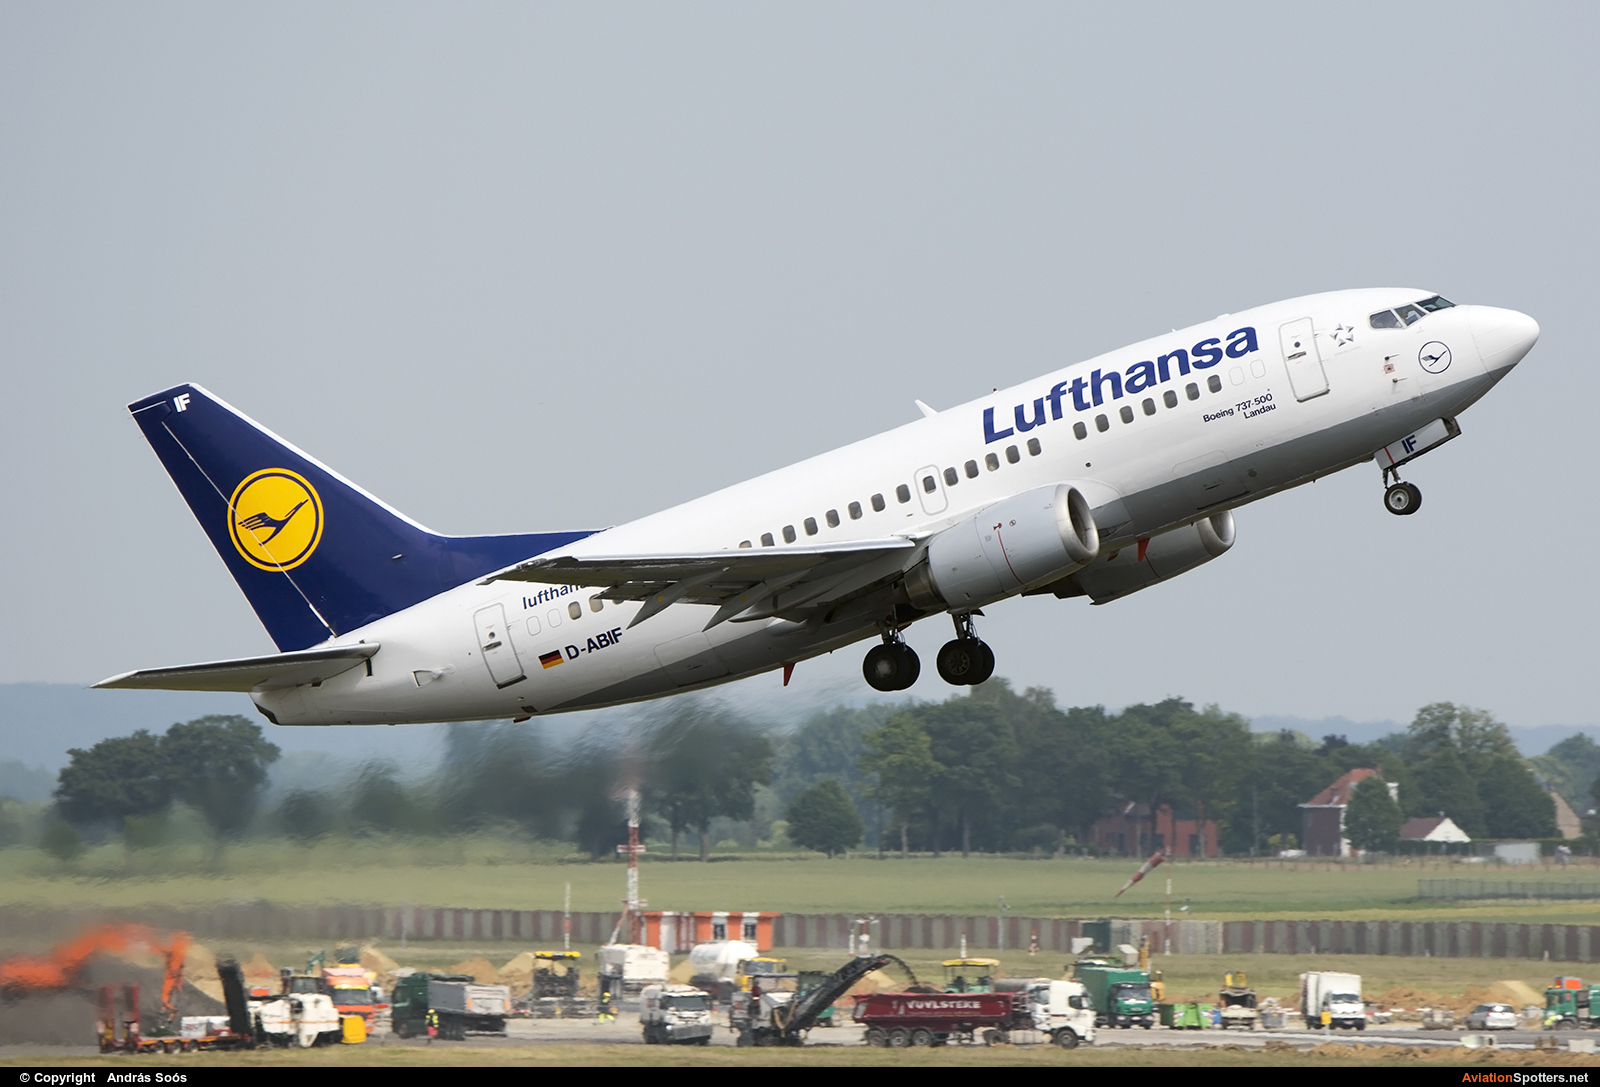 Lufthansa  -  737-500  (D-ABIF) By András Soós (sas1965)